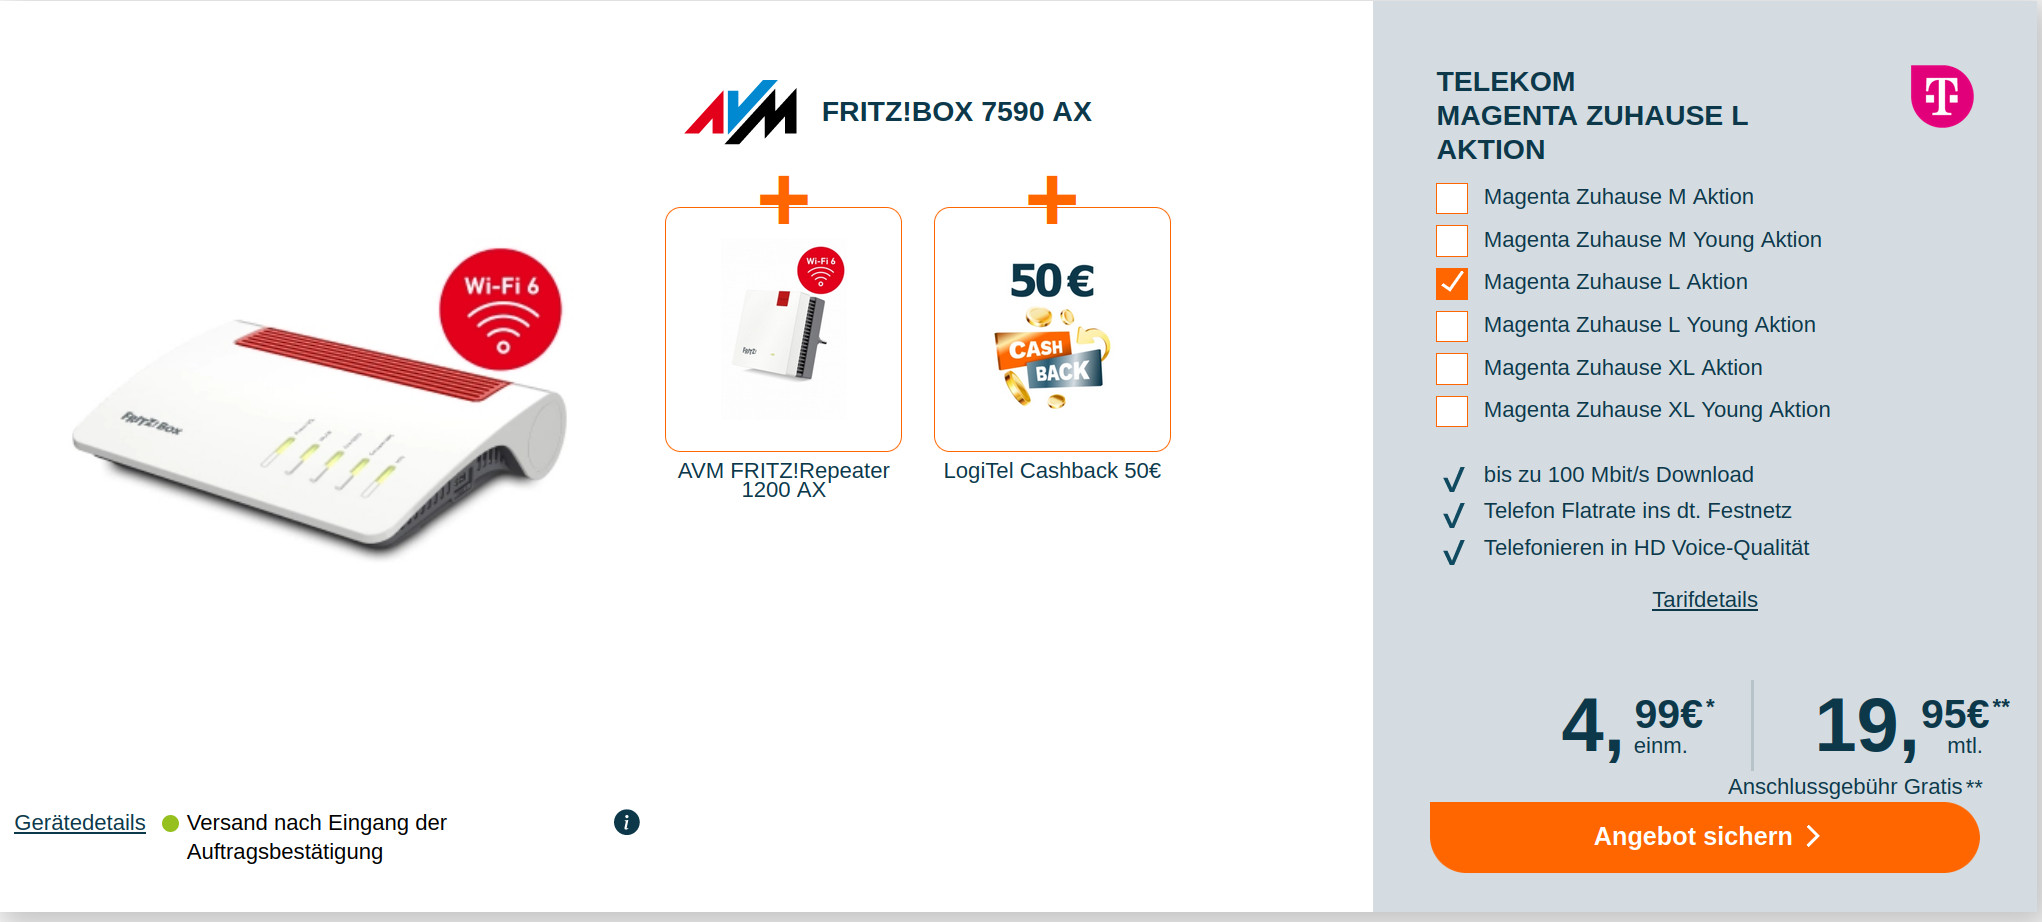 Telekom Magenta Zuhause: 50 Euro Cashback plus Repeater plus Fritzbox 7590 AX mit Magenta Tarif für mtl. 19,95 Euro